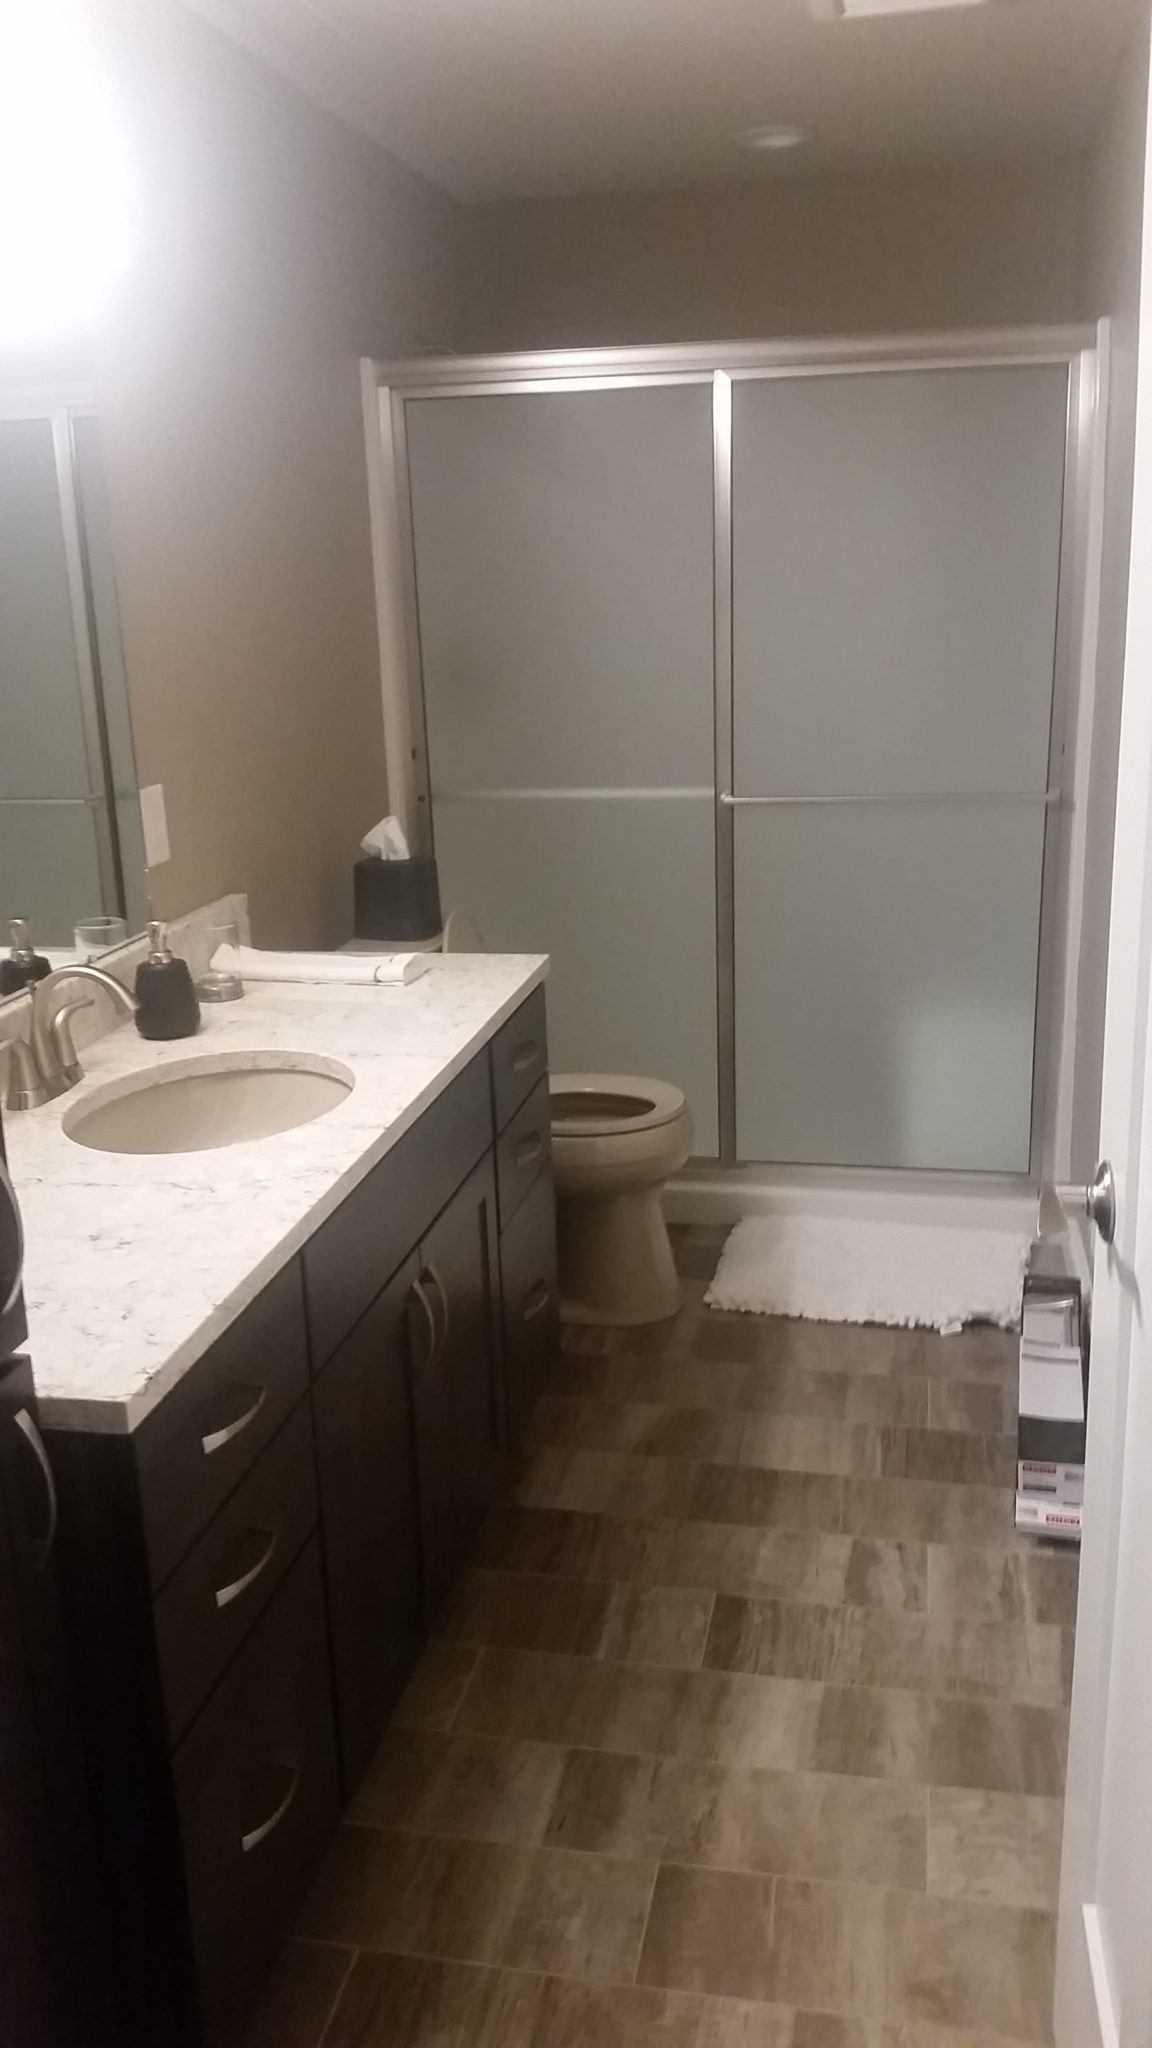 Bathroom Remodel Average Cost - Conger Construction, Inc